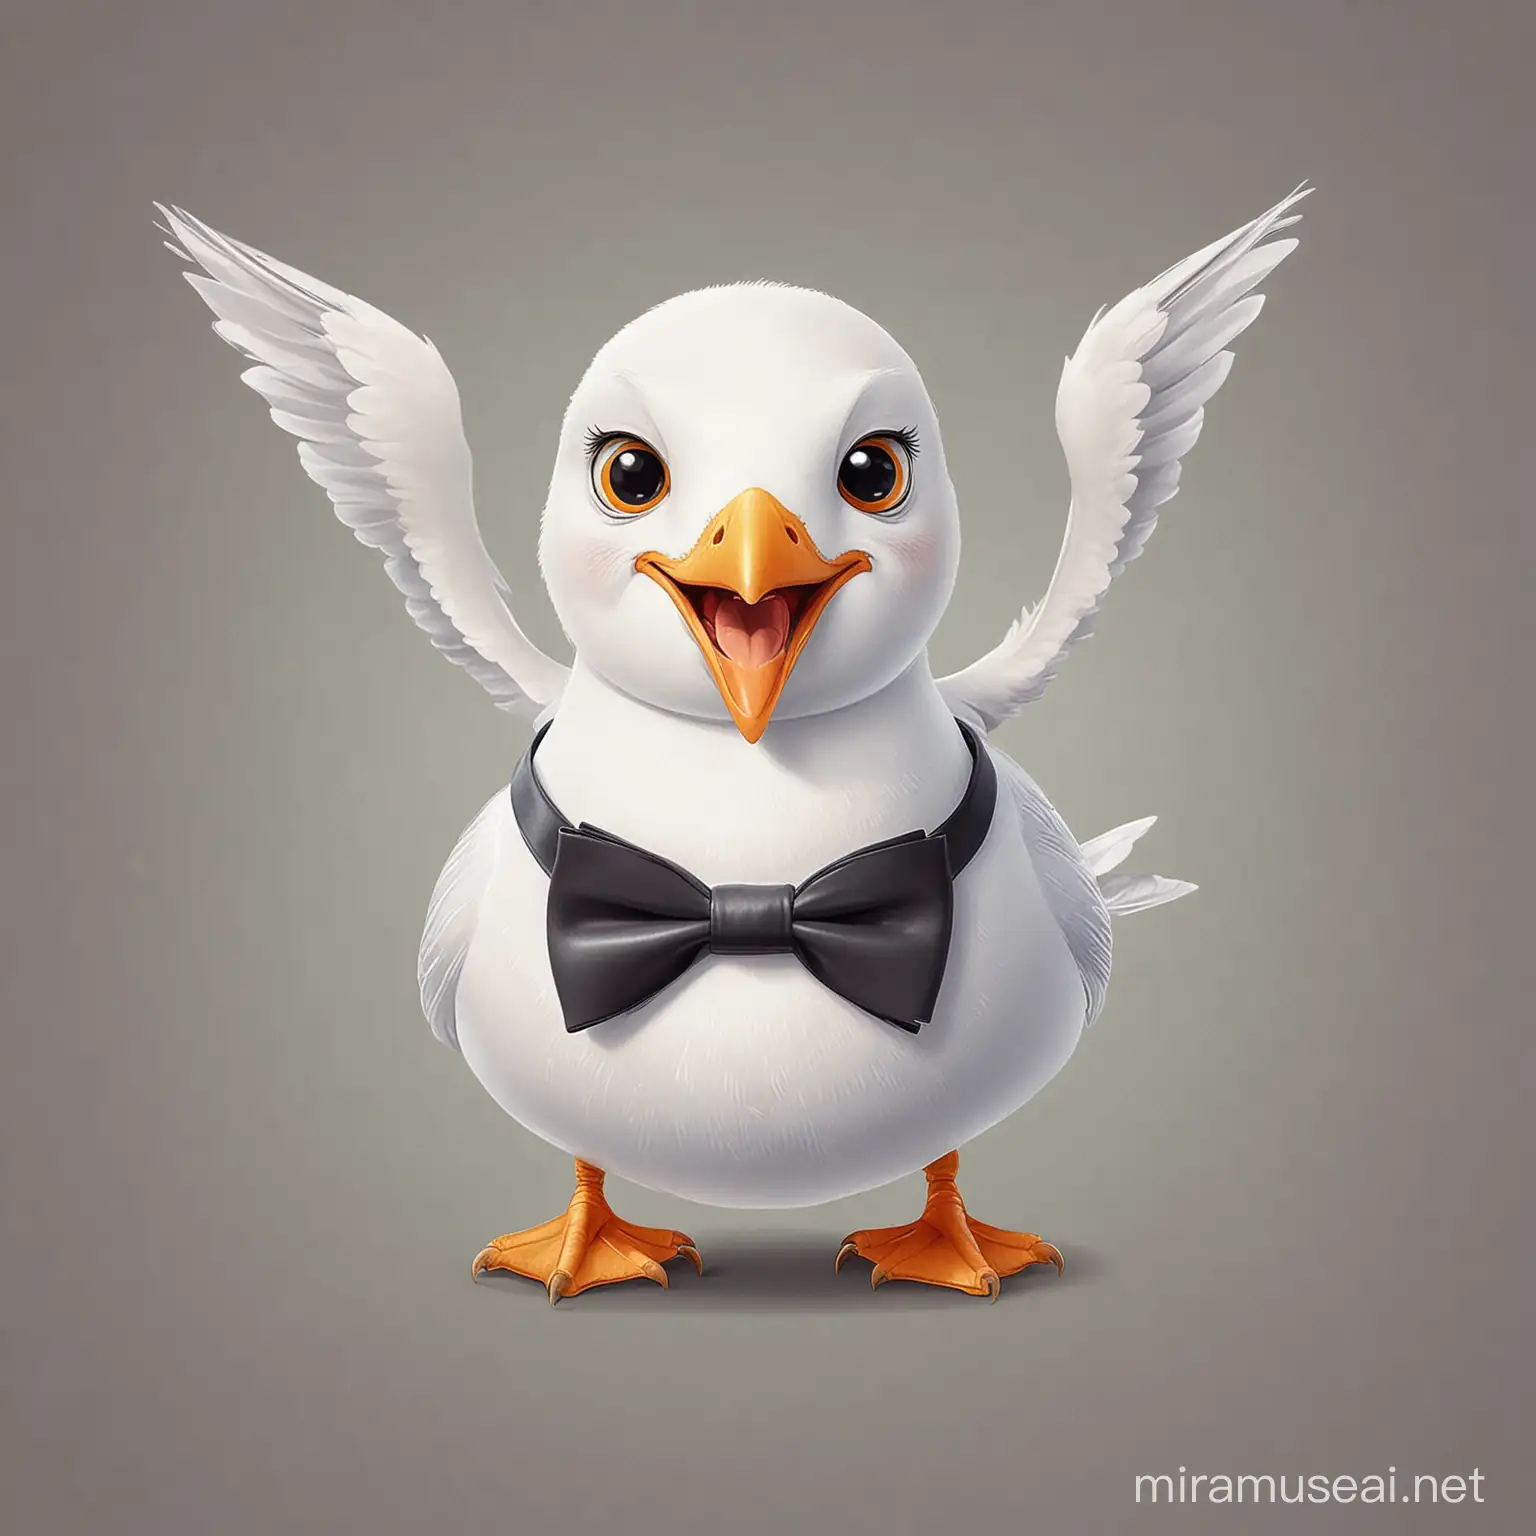 seagulls cartoon with bow tie

